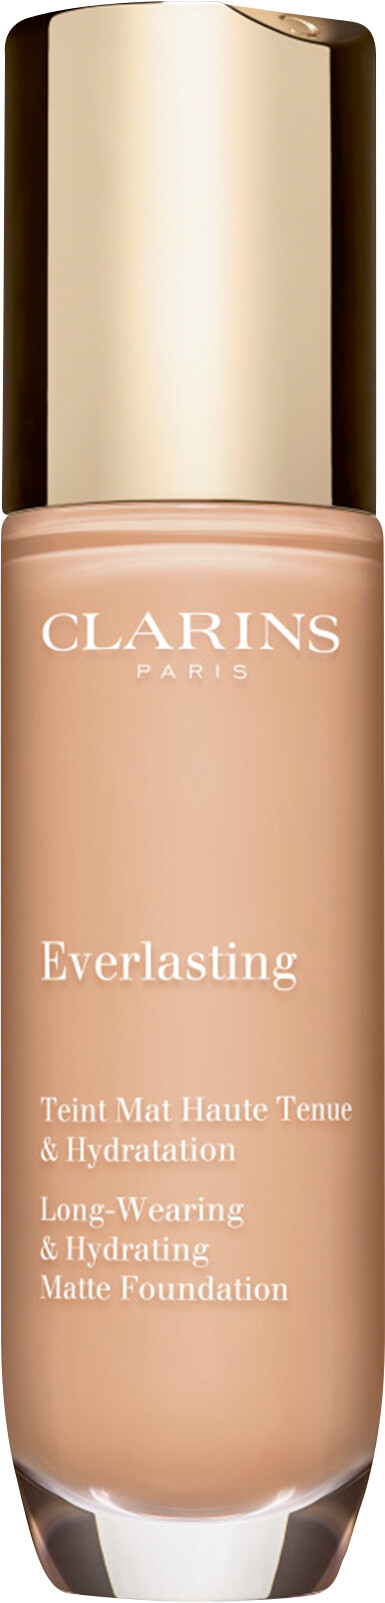 Clarins Everlasting Long-Wearing & Hydrating Matte Foundation 30ml 102.5C - Porcelain